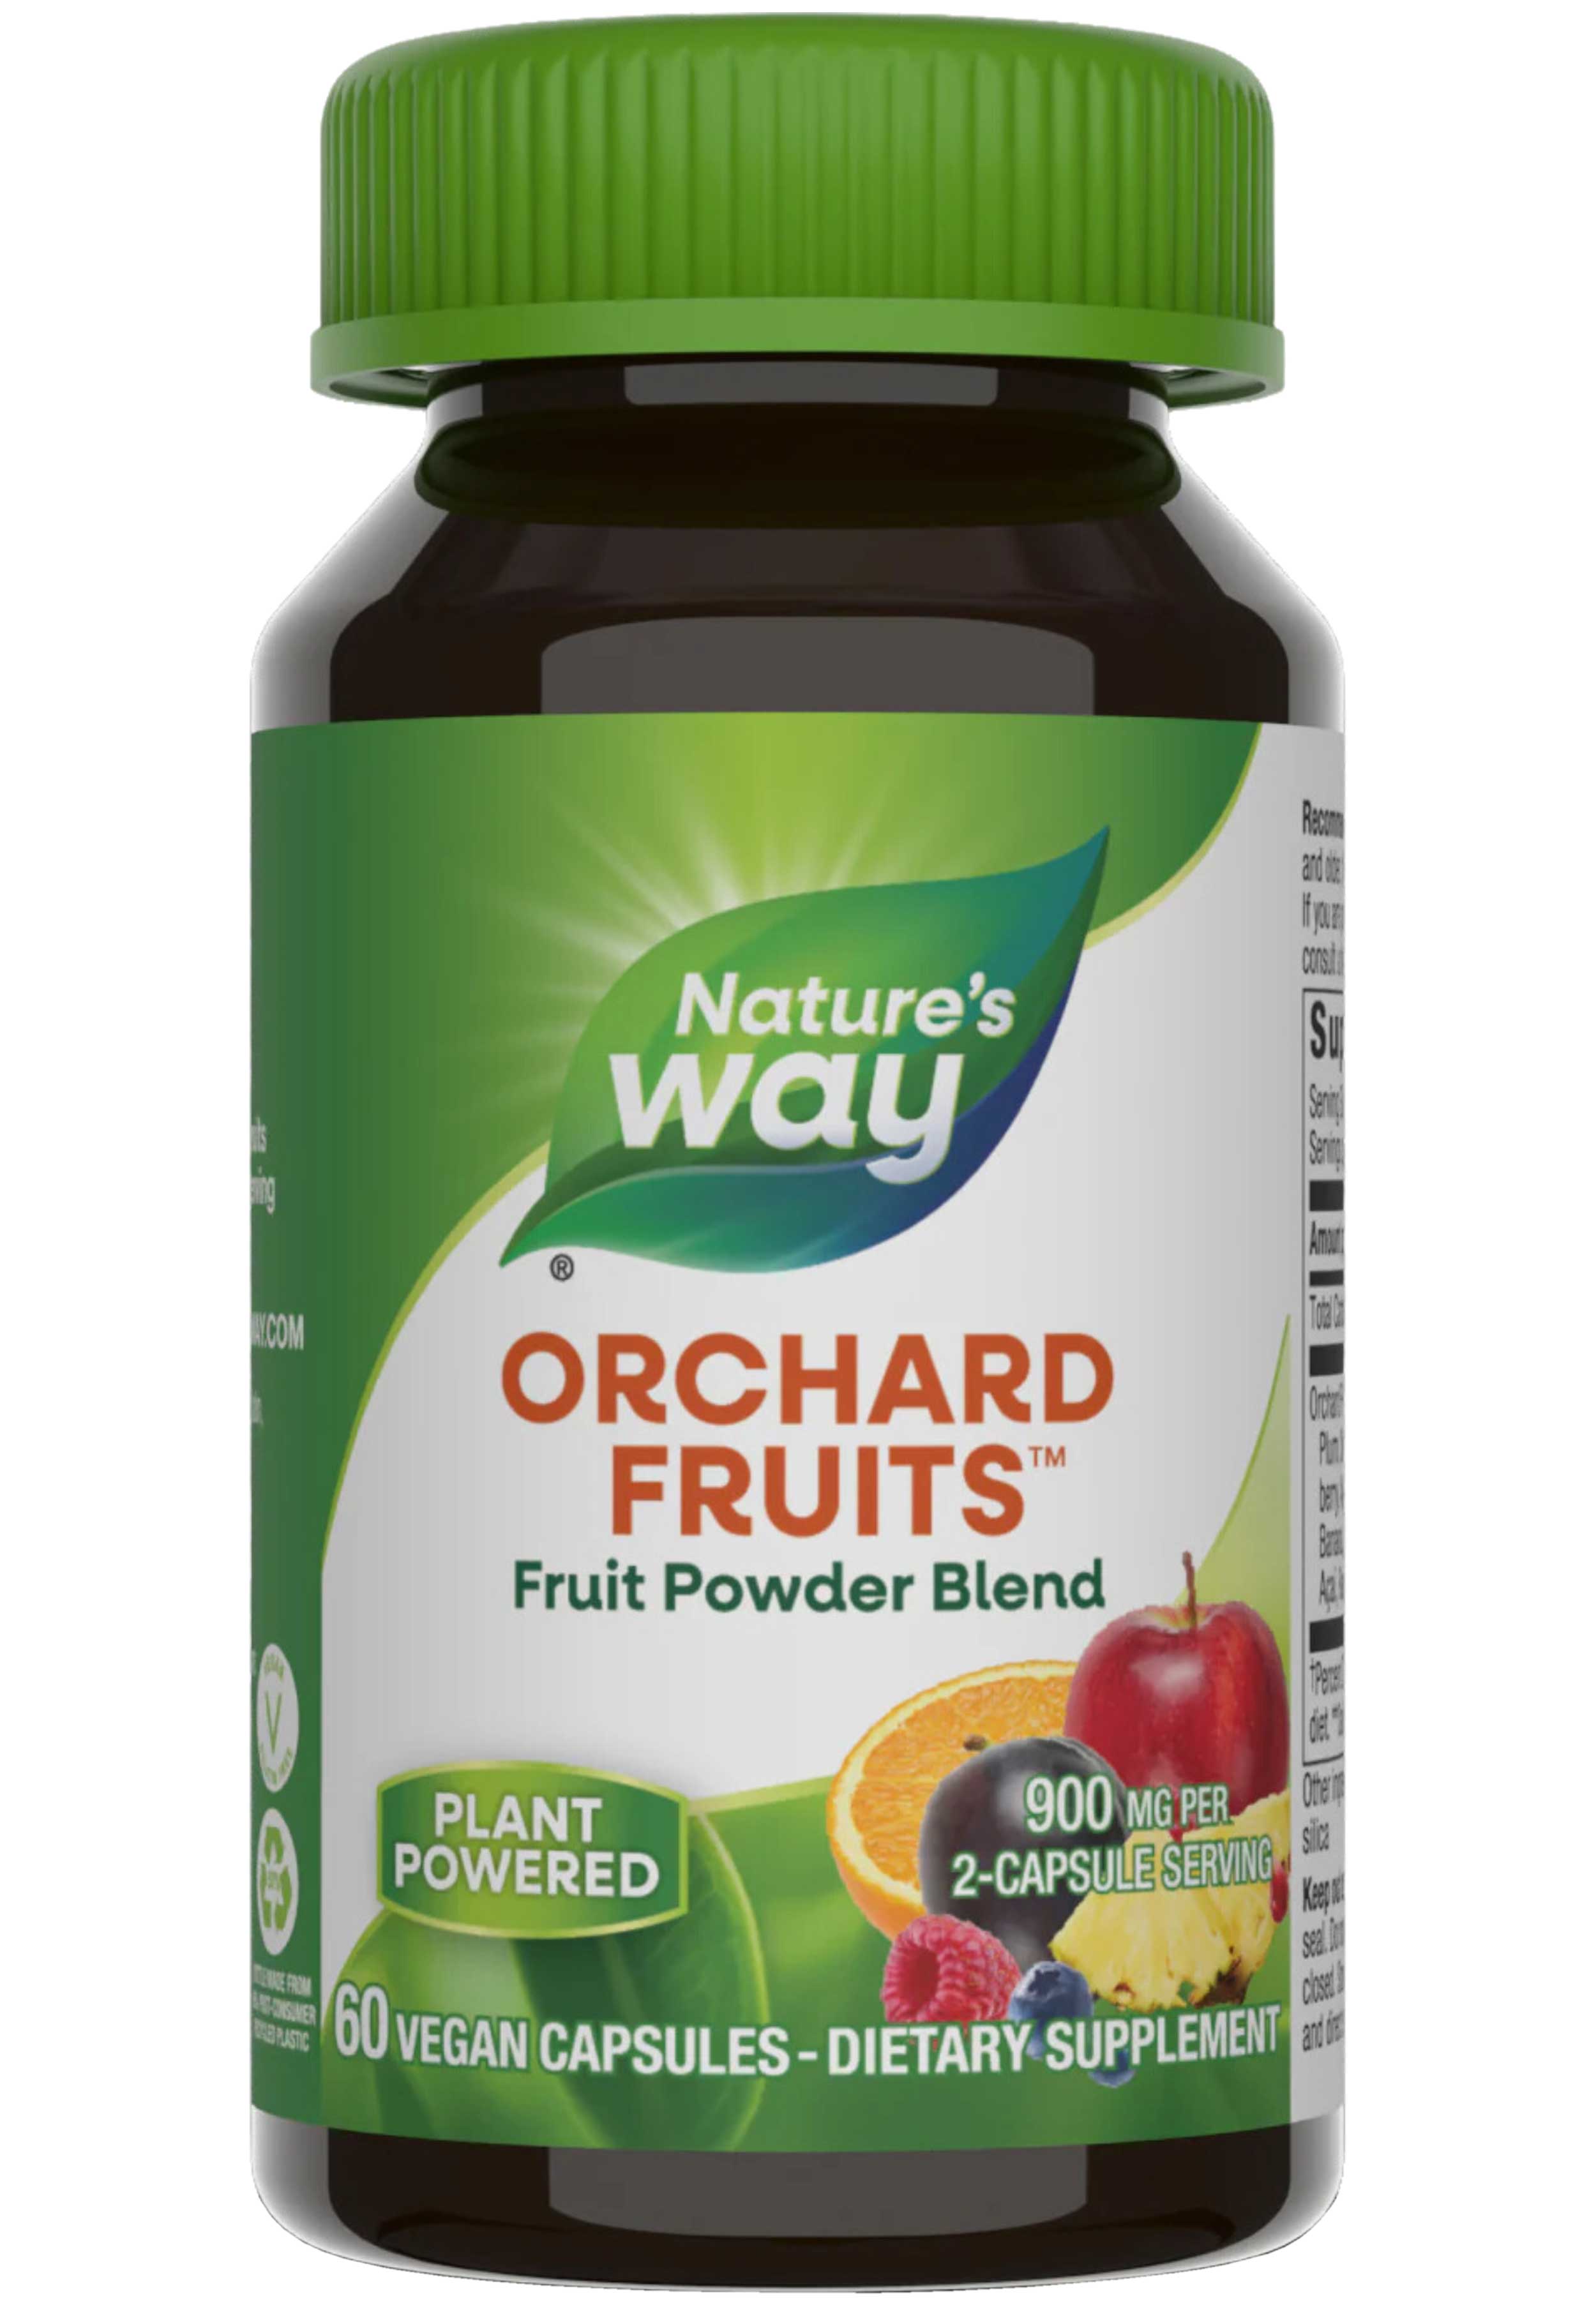 Nature's Way Orchard Fruits